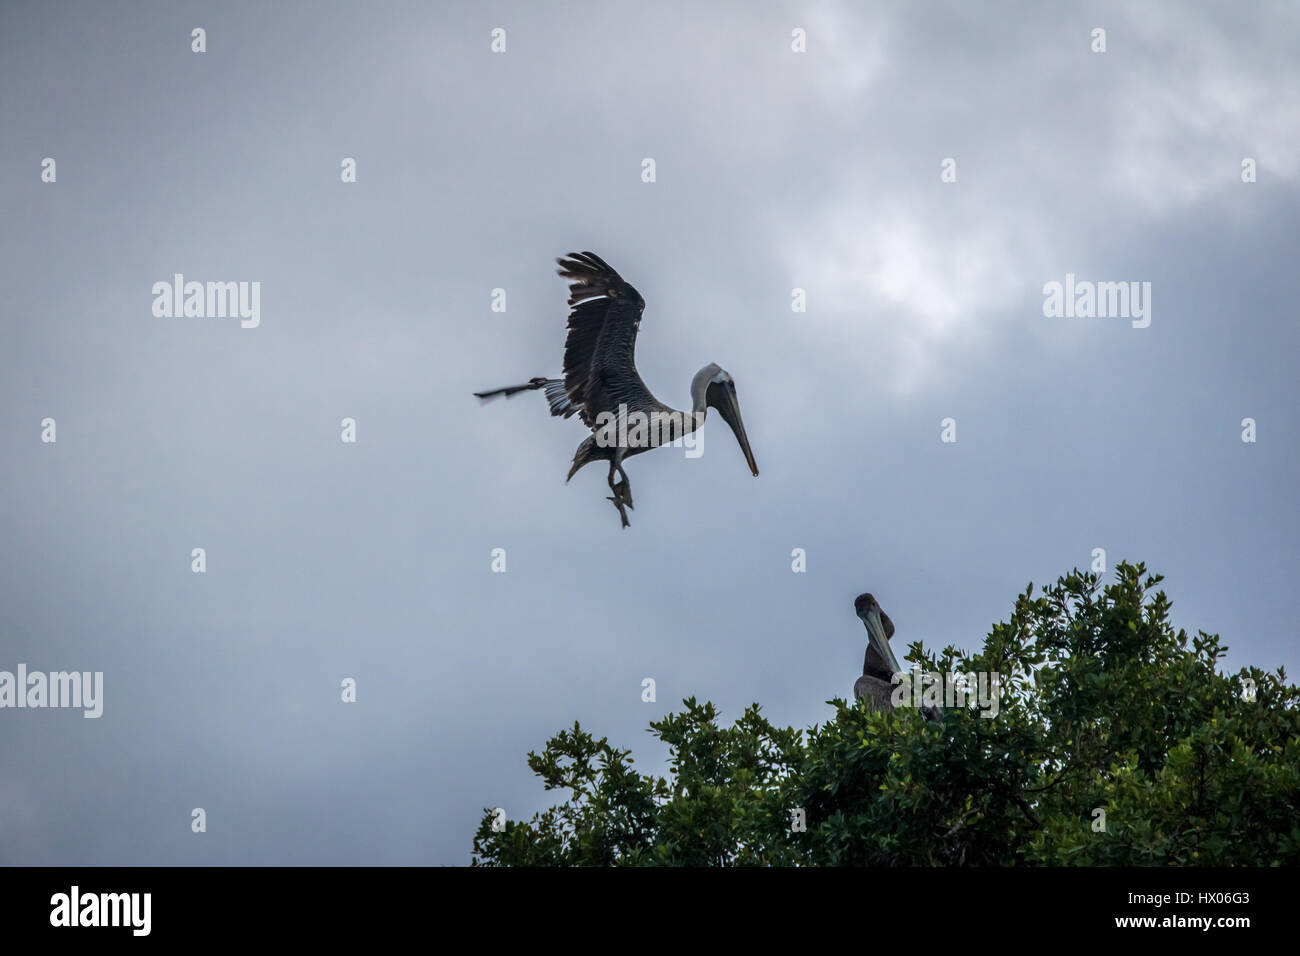 Brown pelican volando sopra un albero - Panama City, Panama Foto Stock